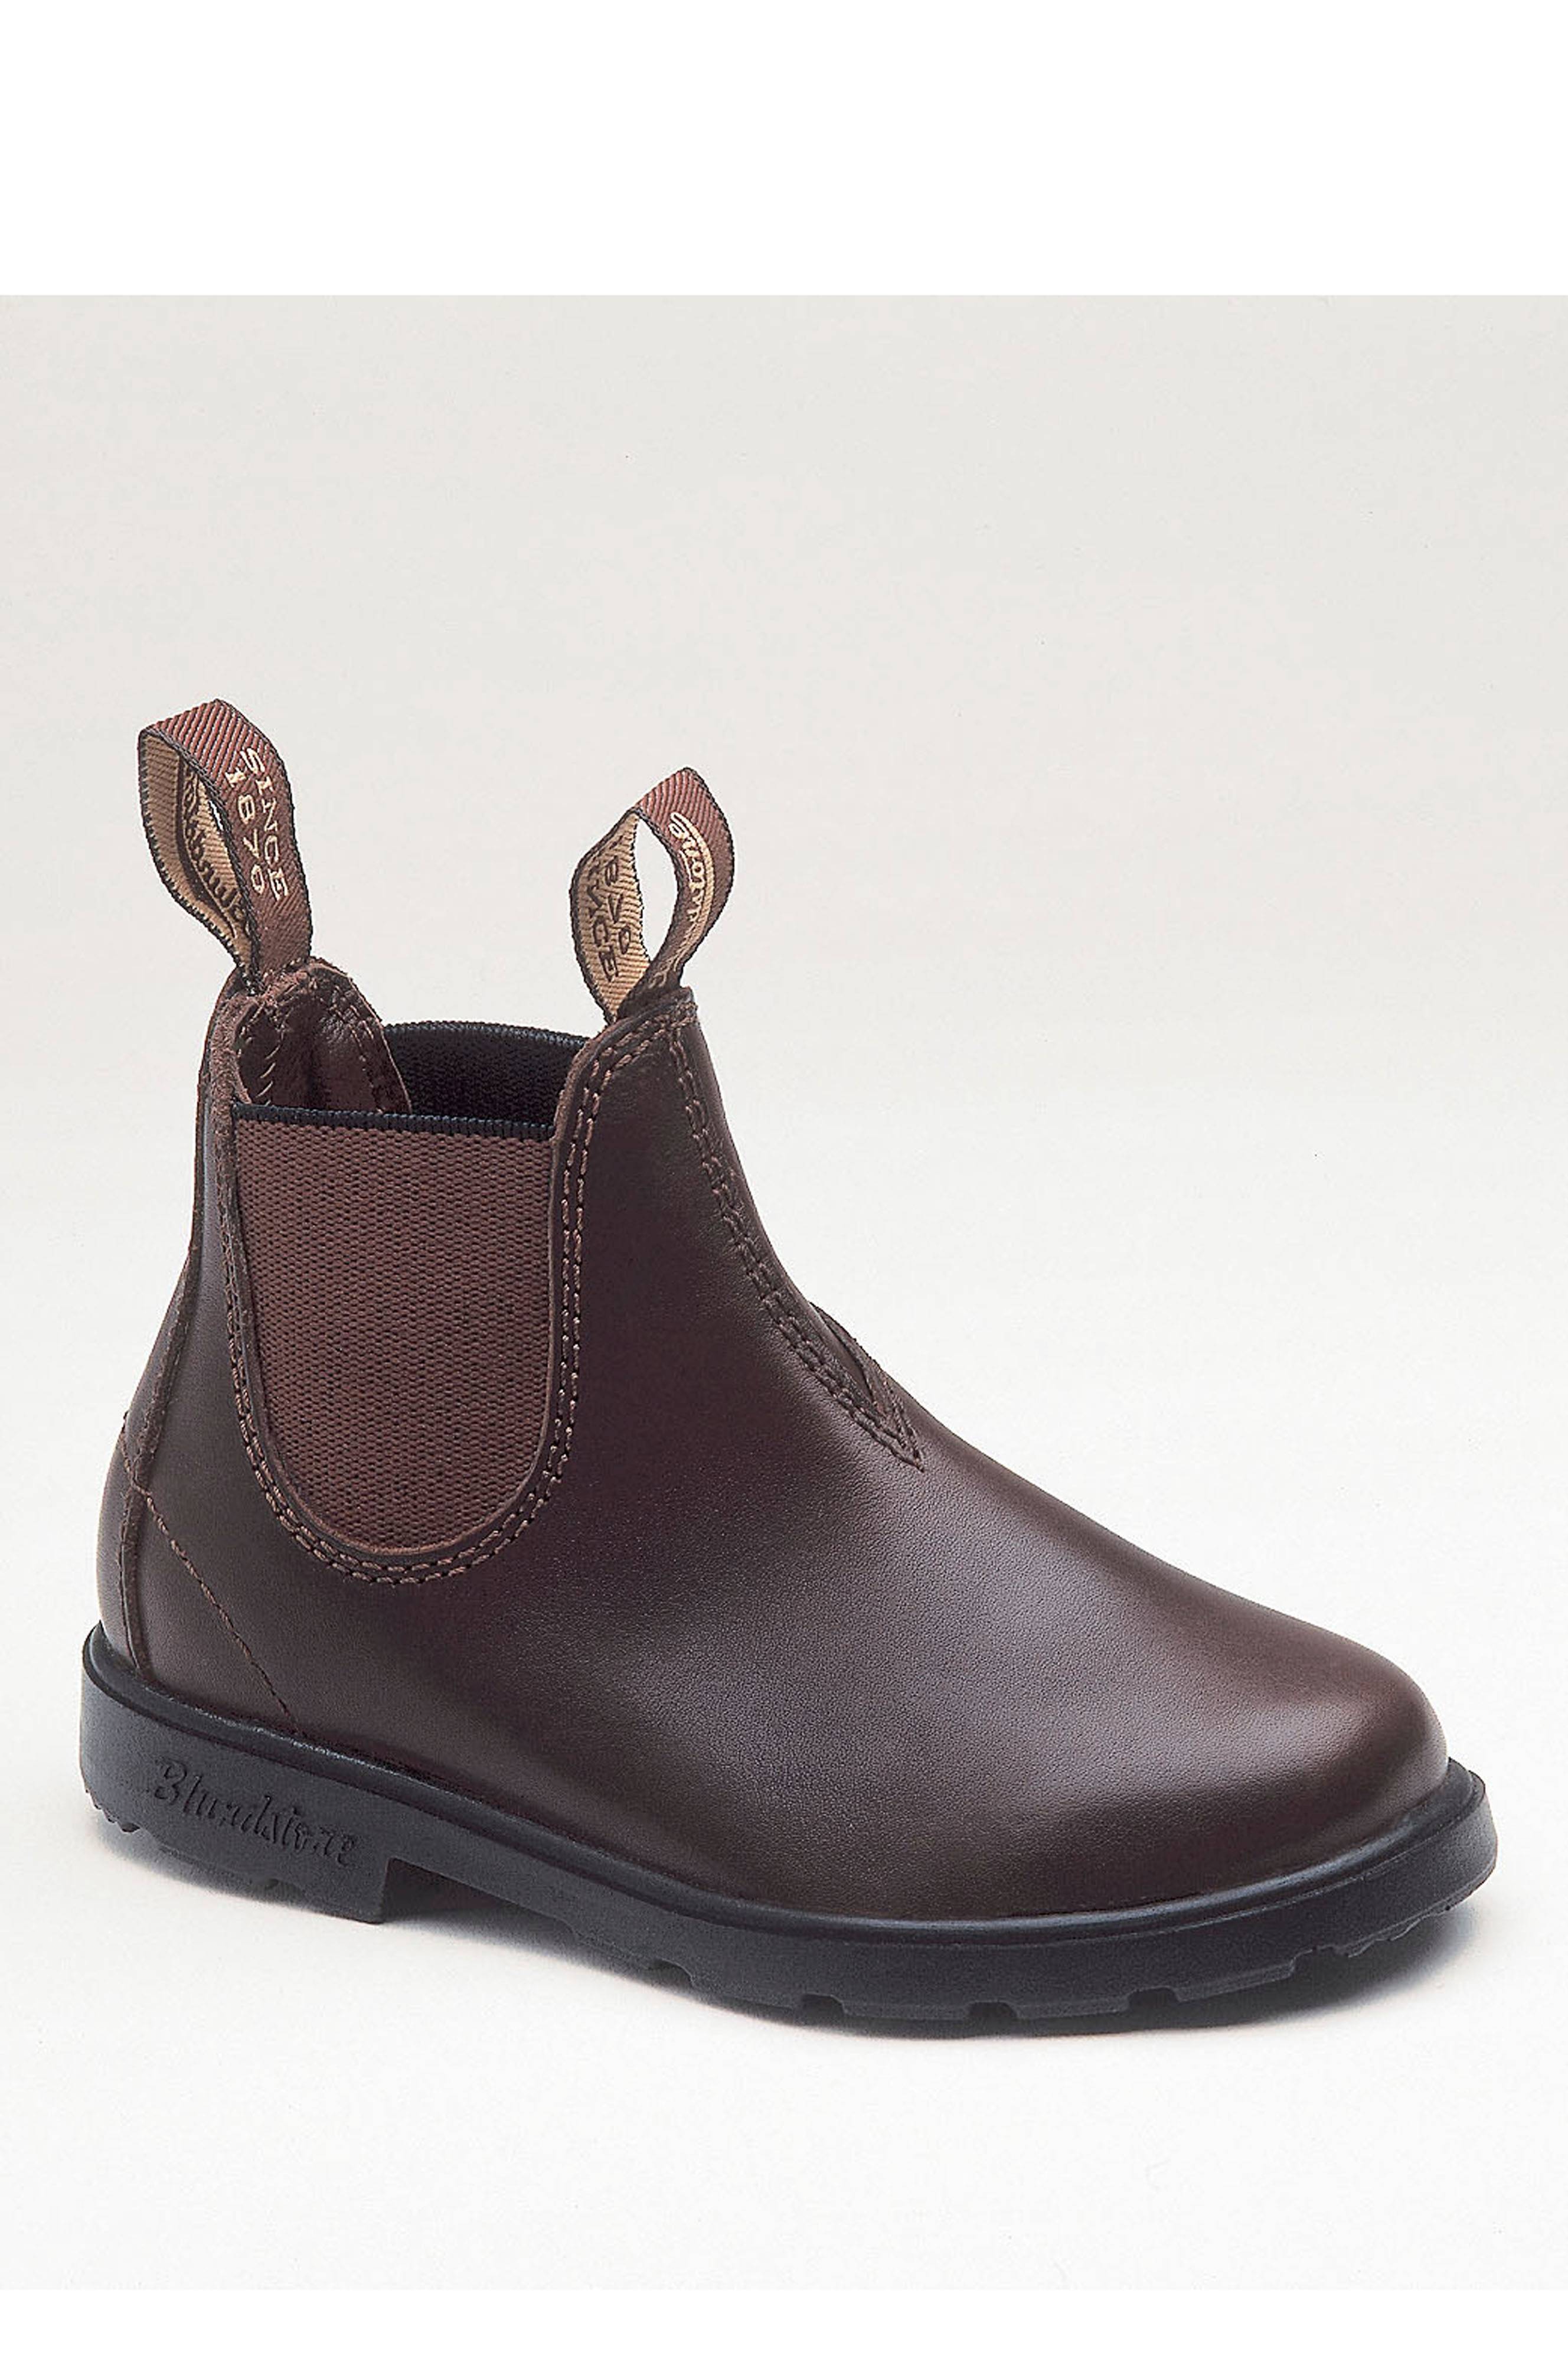 Blundstone Classic 530 - Brun - Boots, støvler & | Ellos.dk